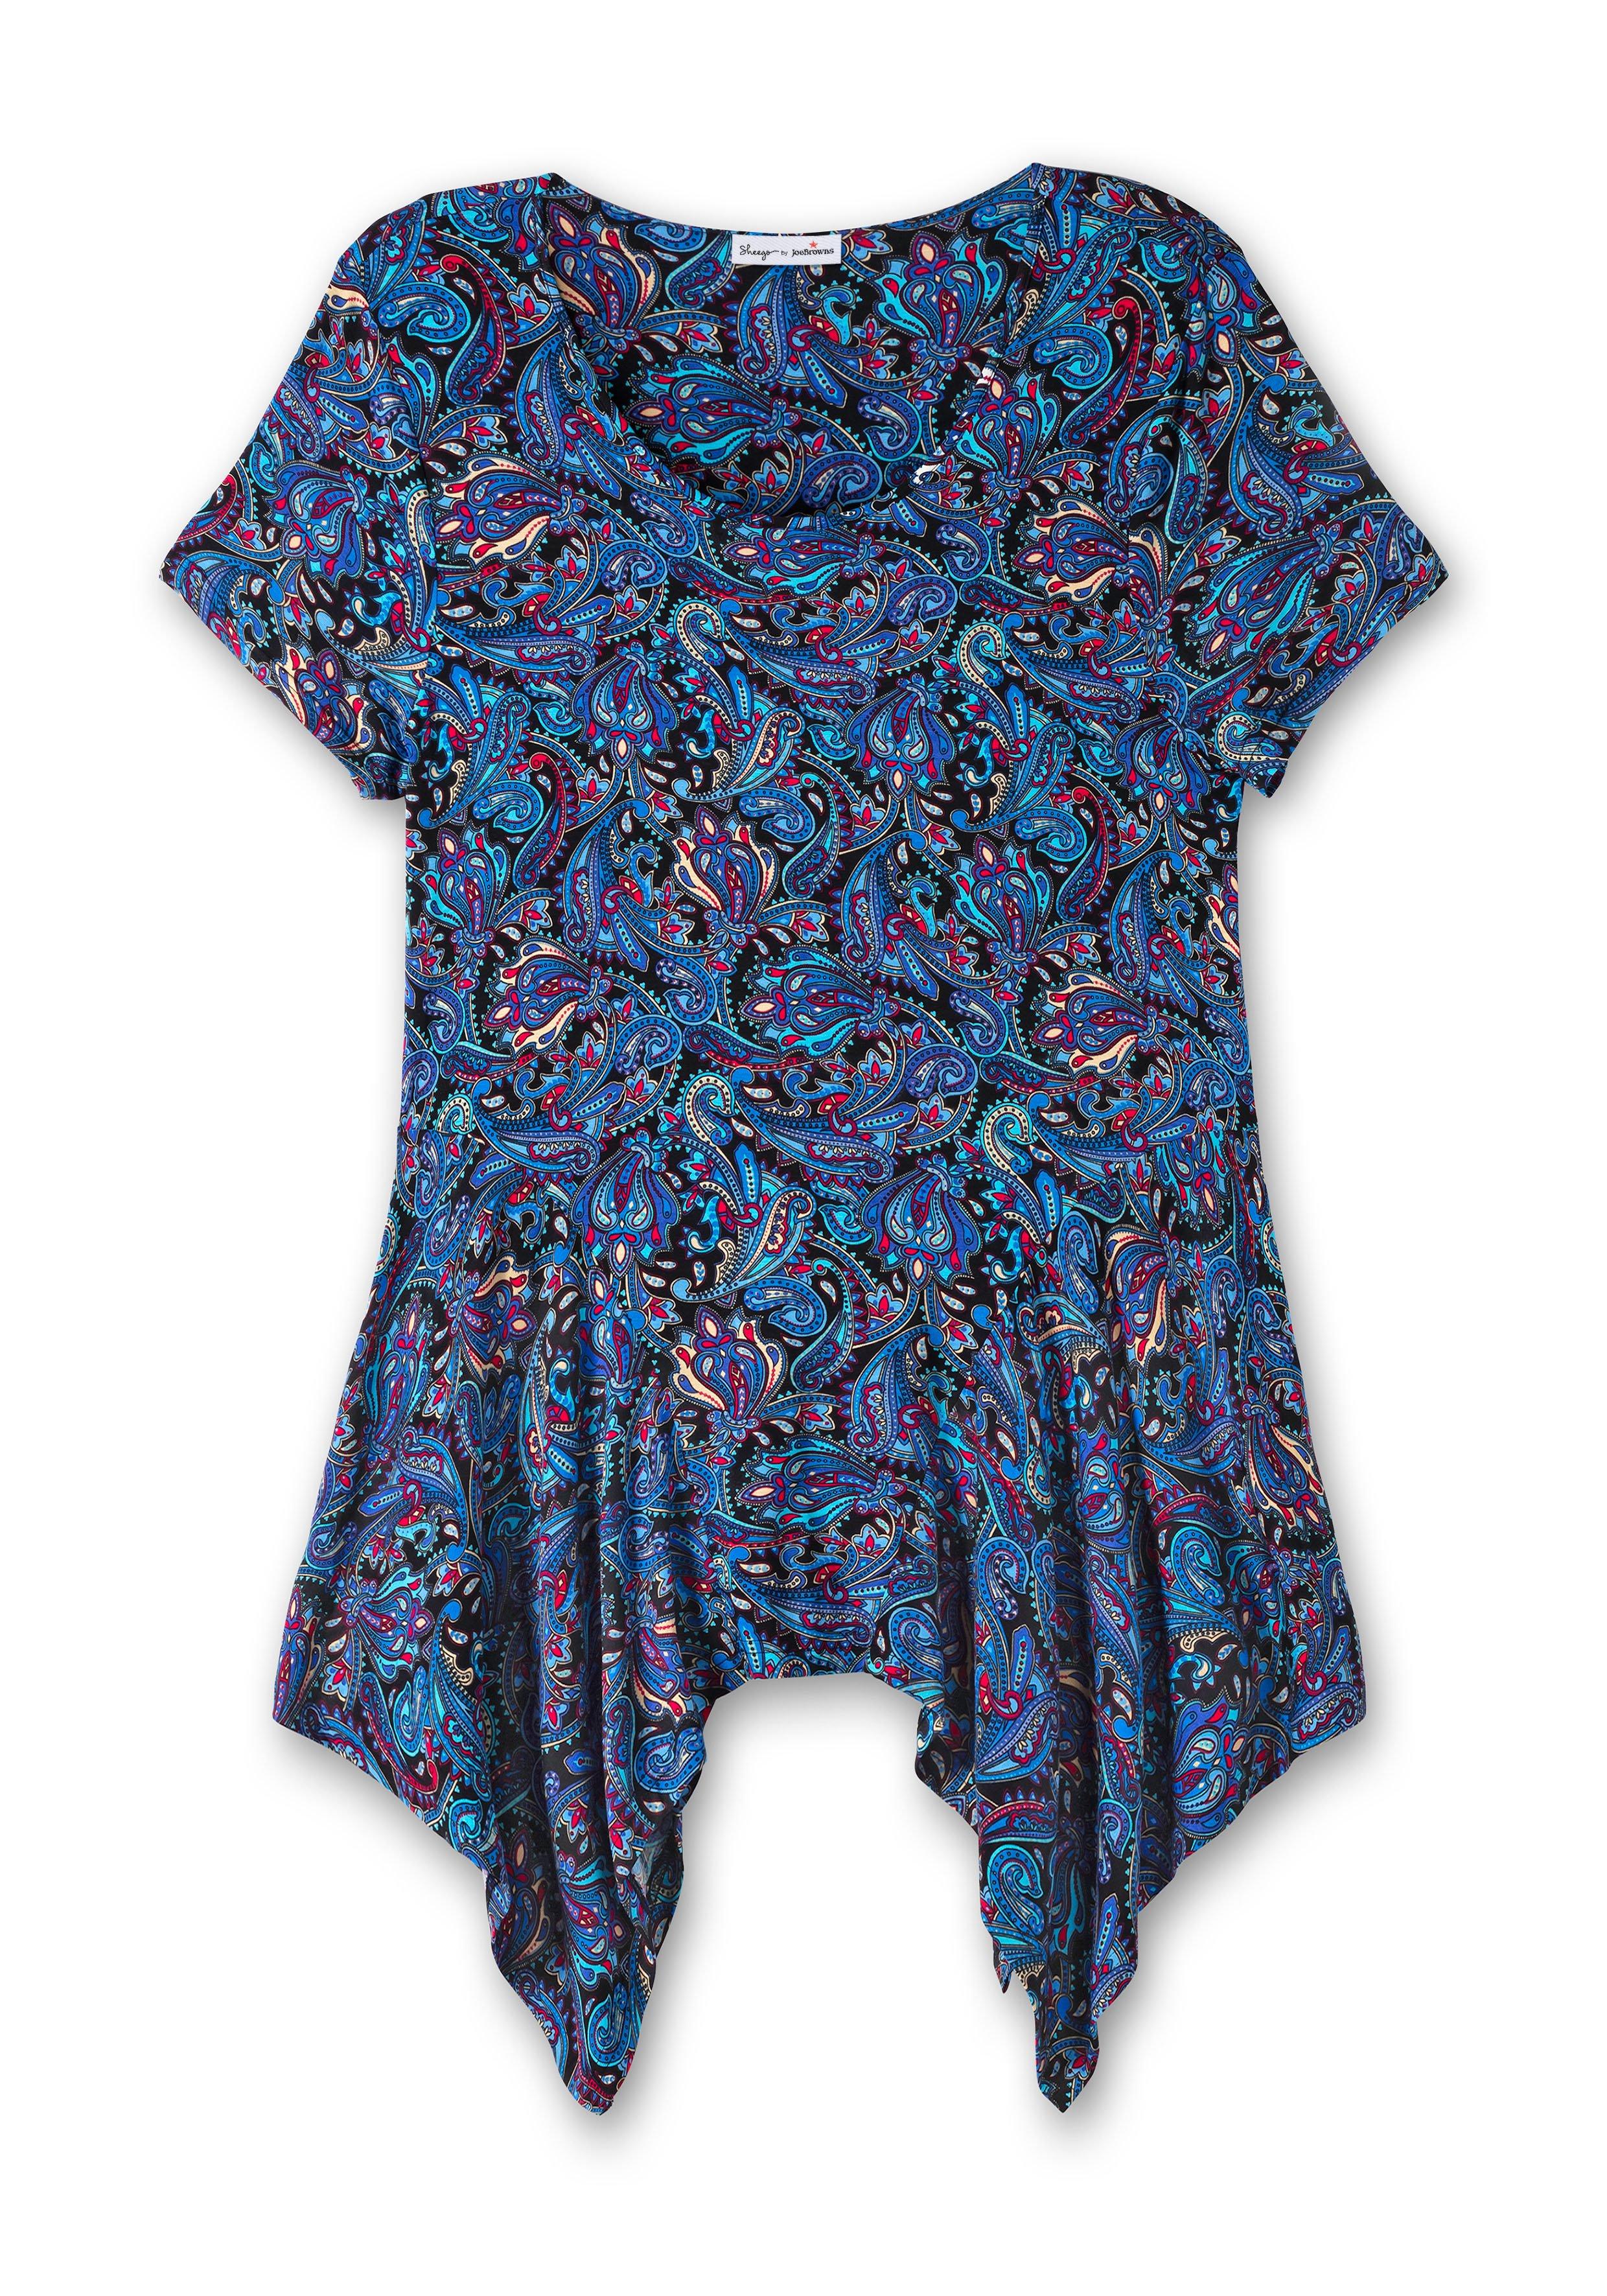 Longform, Zipfelshirt | gemustert Paisleydruck mit blau sheego in -